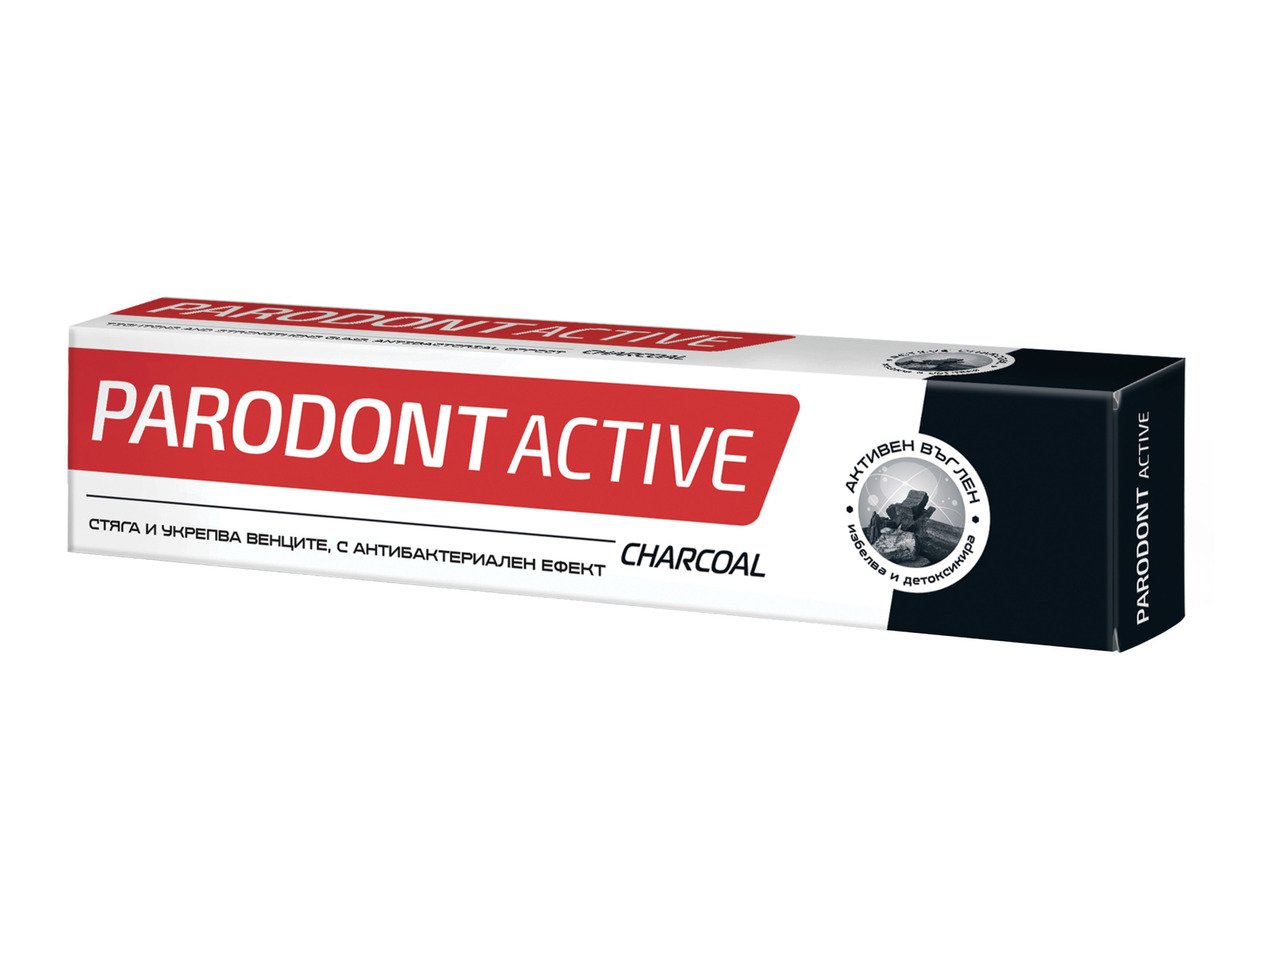 Parodont Active Charcoal Паста за зъби